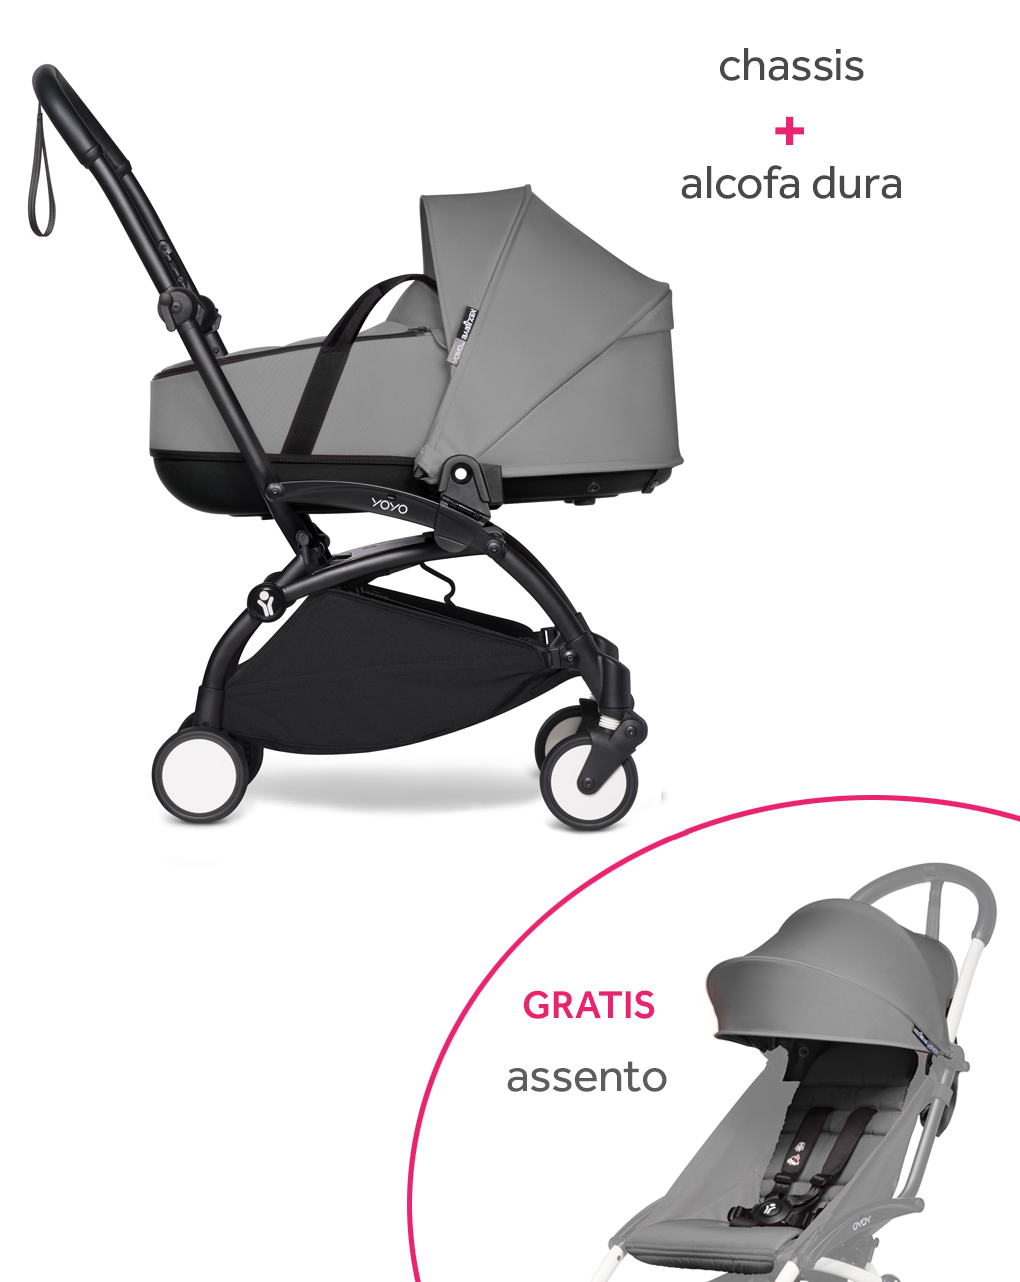 Yoyo² chassis babyzen black e alcofa dura grey + assento grey gratuito - Babyzen